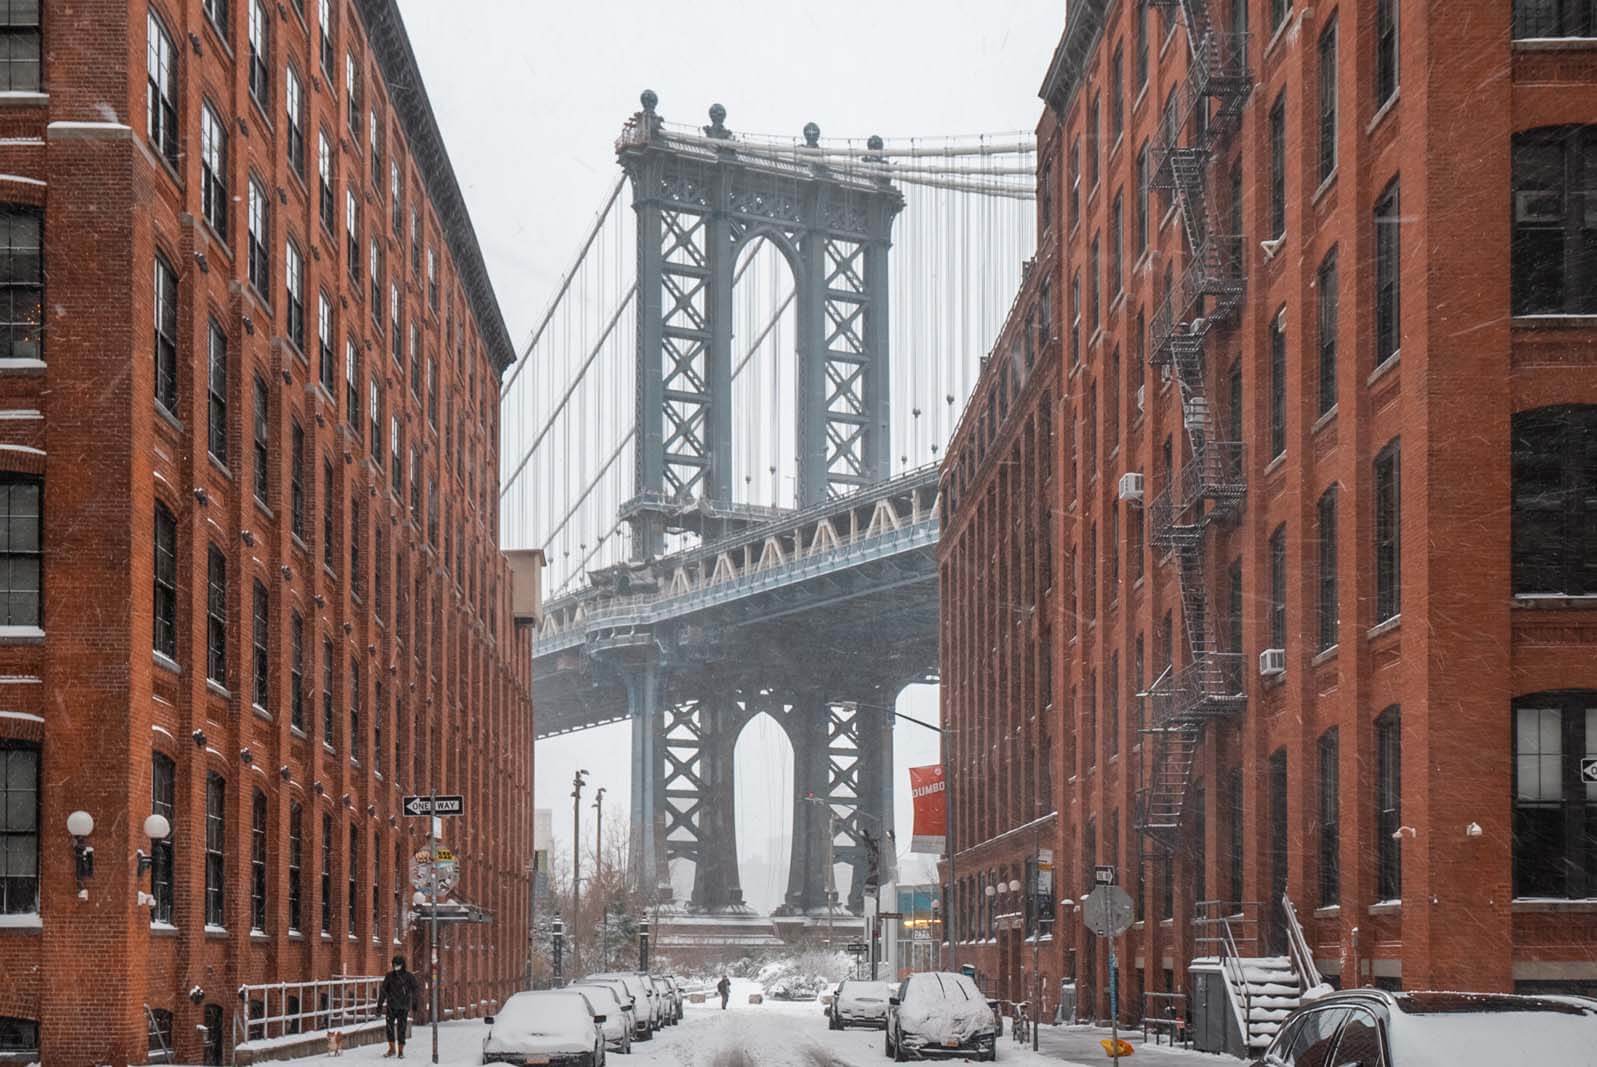 The famous Instagram shot in DUMBO Brooklyn of the Manhattan Bridge